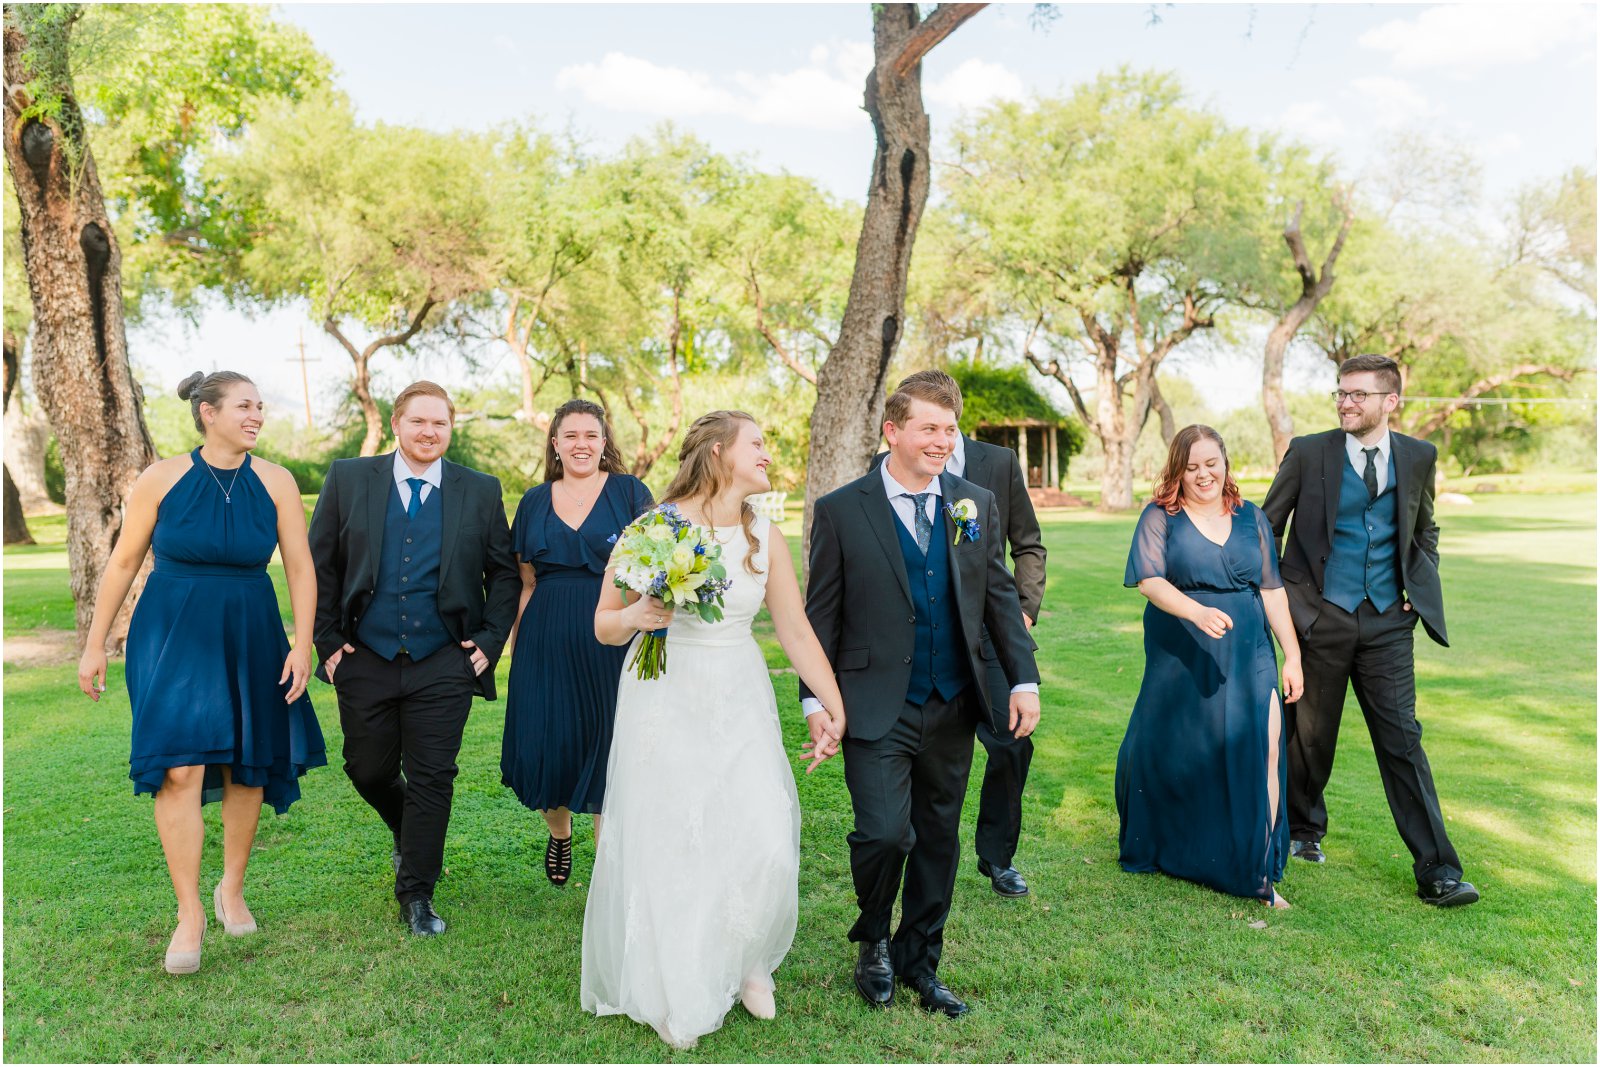 bridal party walking together on lawn at La Mariposa Tucson